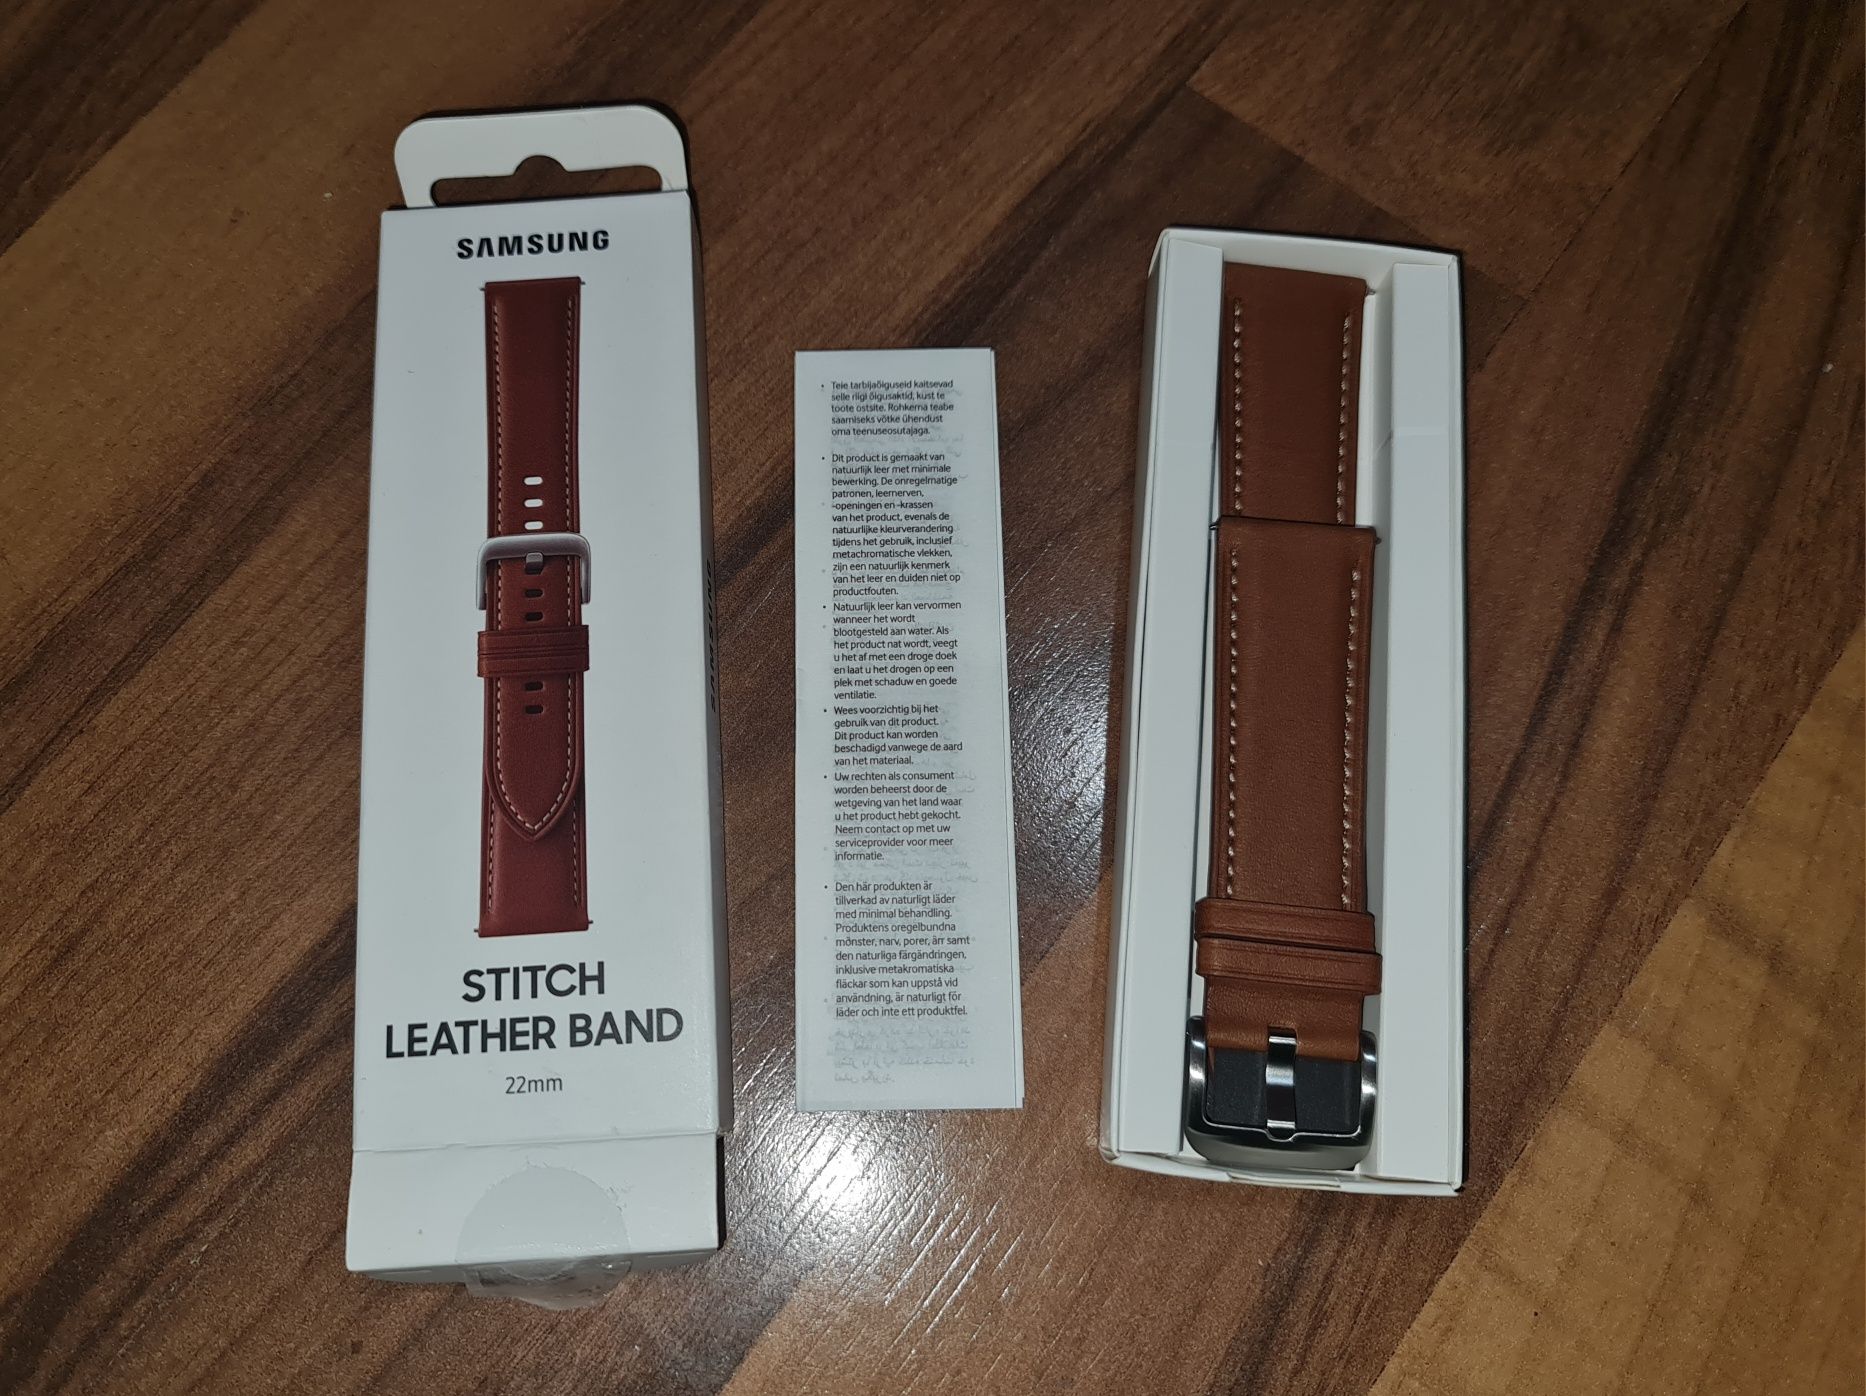 Curea bratara smartwatch originala Samsung Stitch
Leather Band 22mm